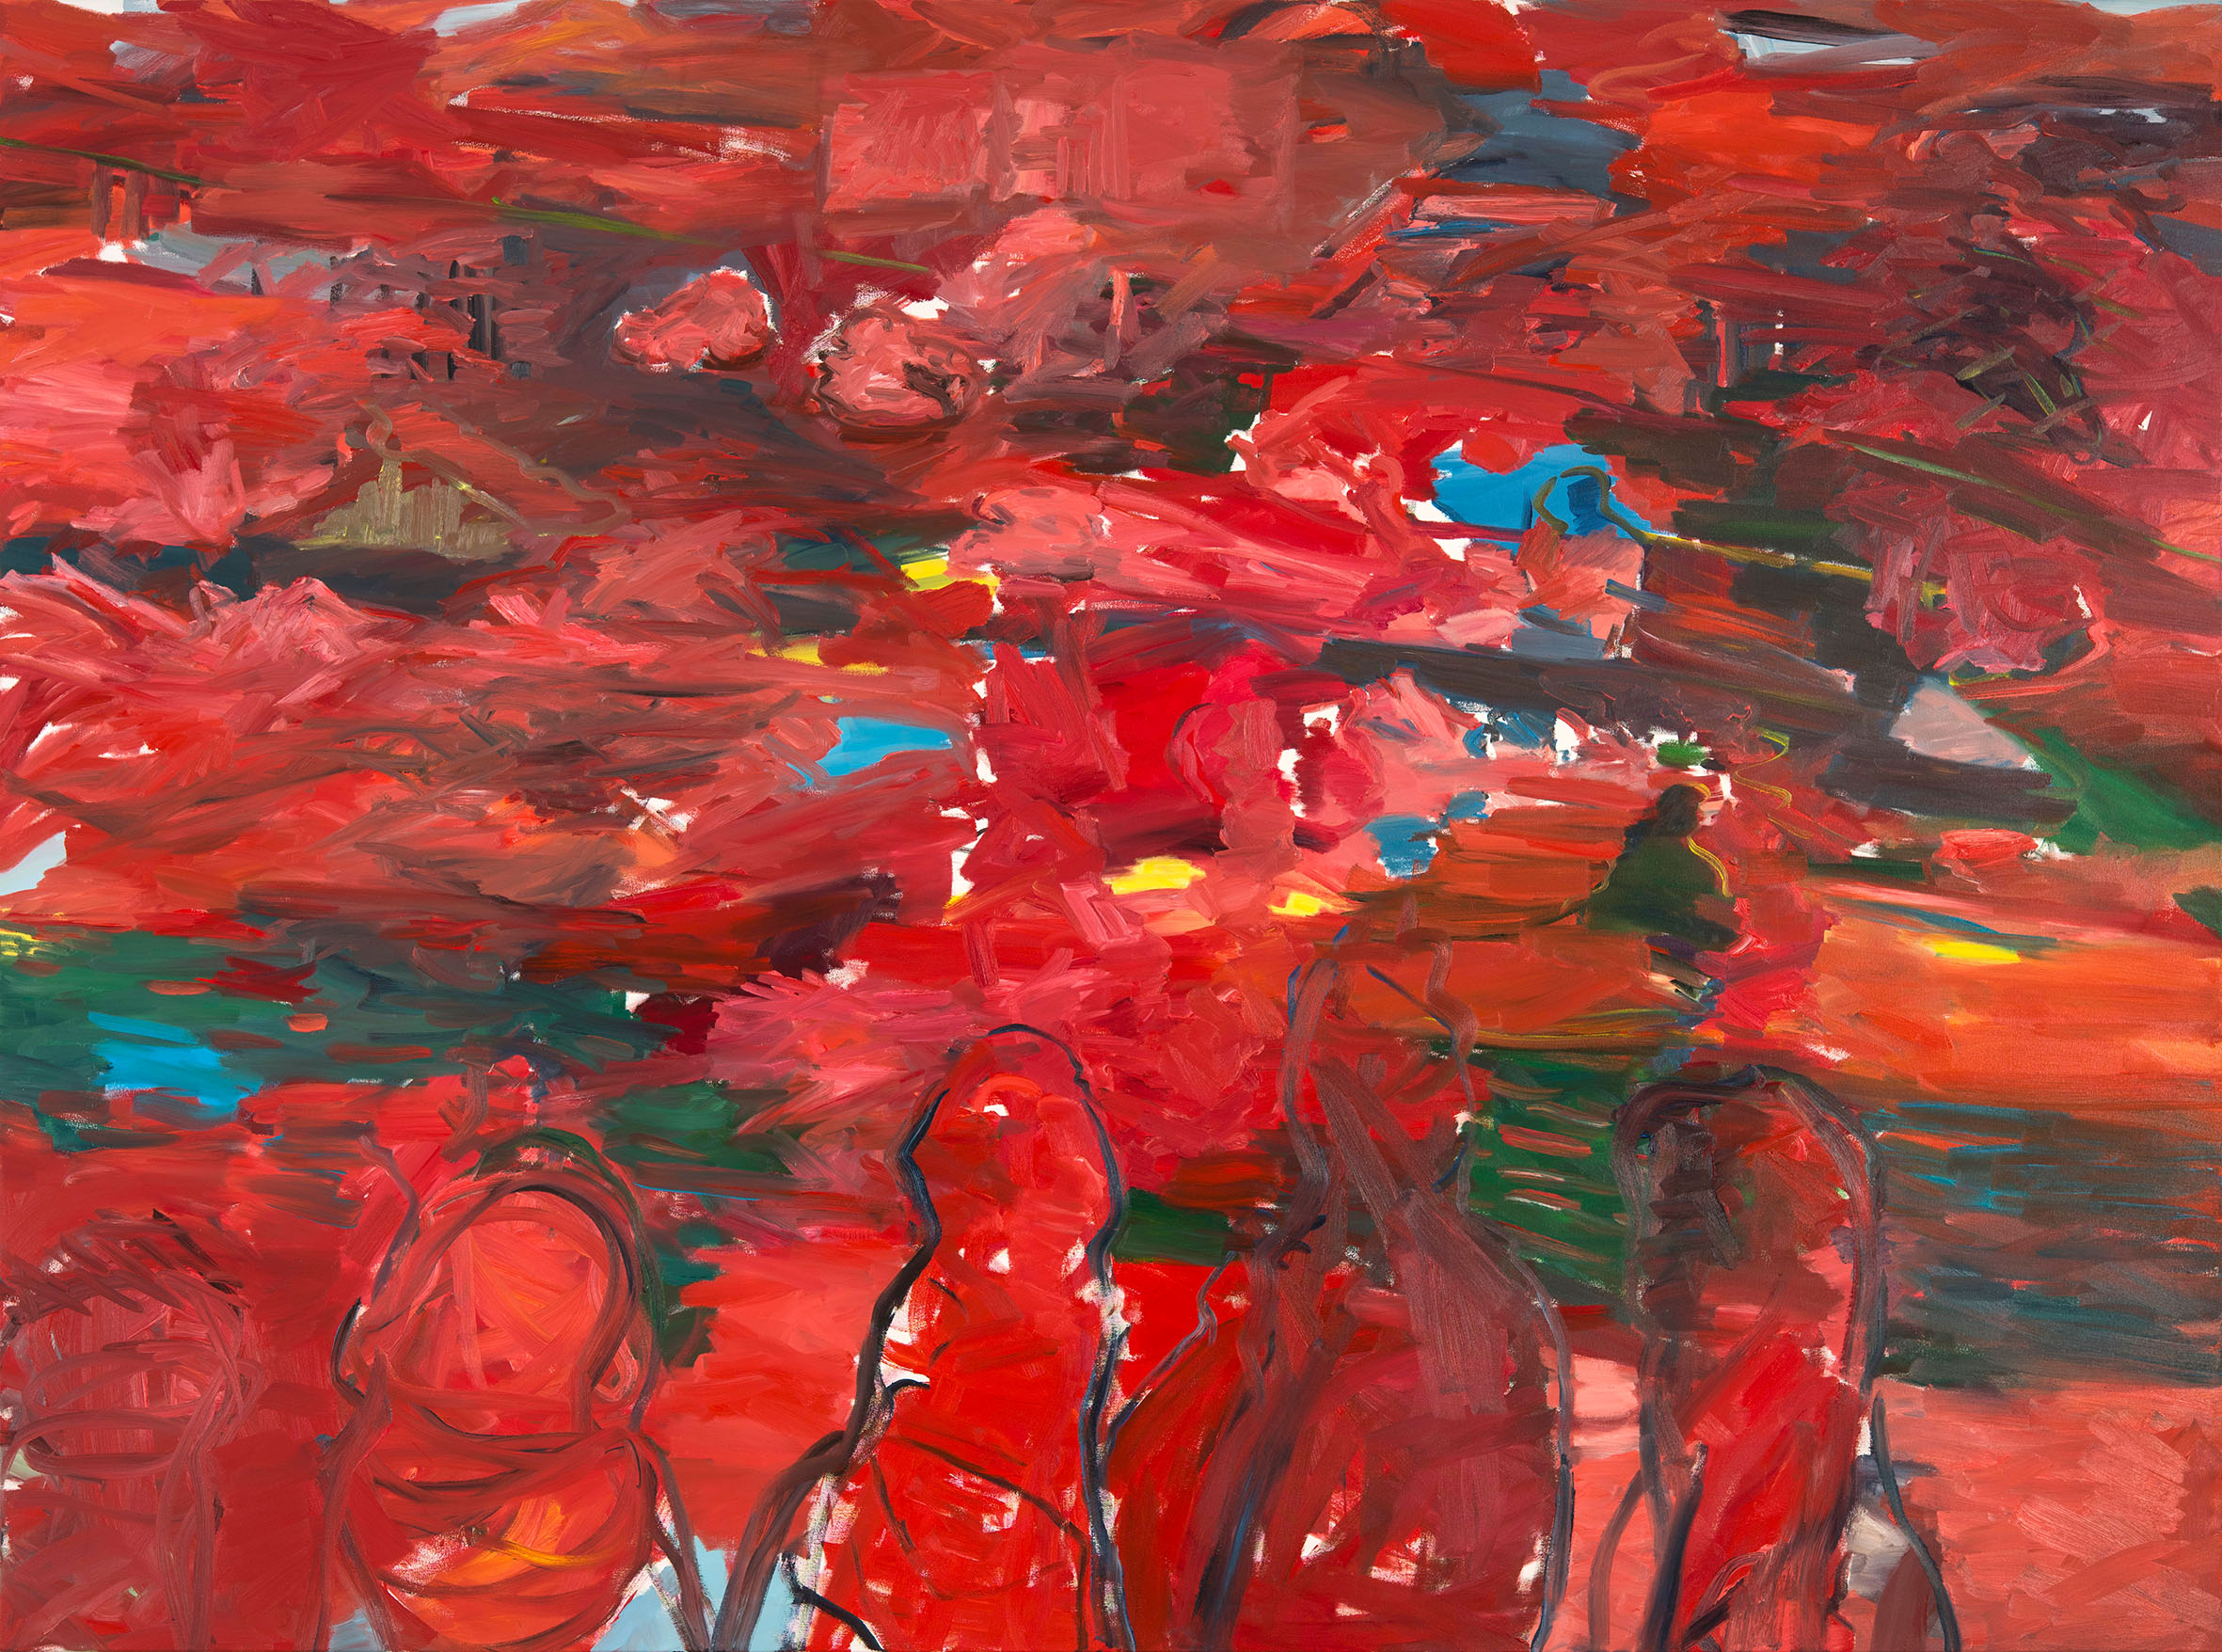 Abb.: Cordula Güdemann, Farbige in Farblandschaft, 2017, Öl auf Leinwand, 200 x 270 cm